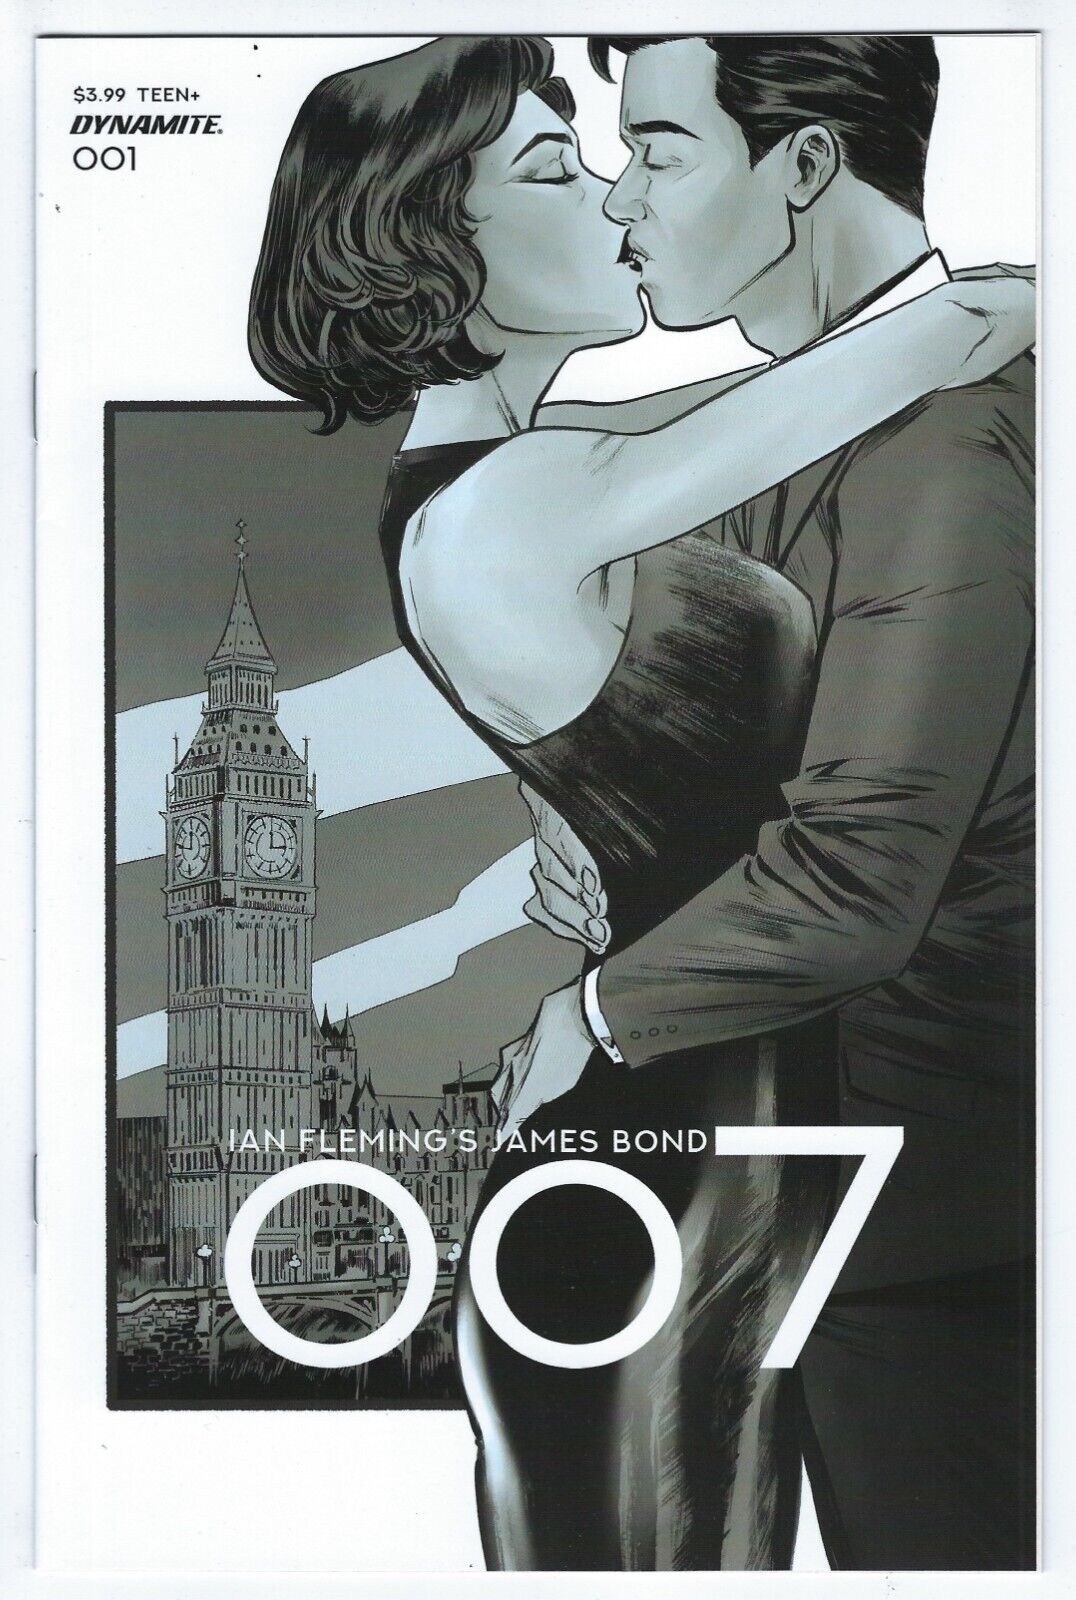 Dynamite JAMES BOND 007 #1 first printing 1:7 Lee B&W variant